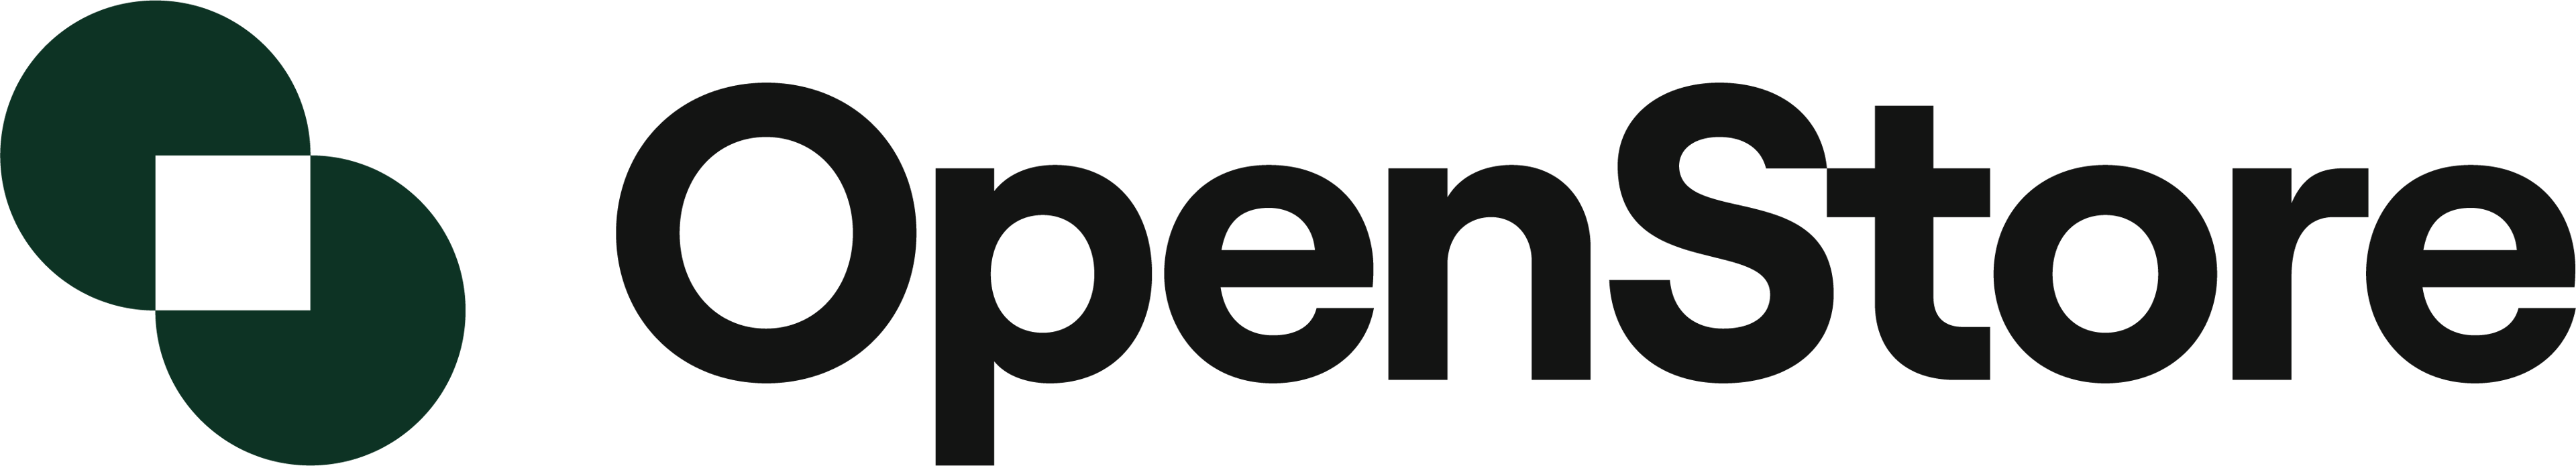 OS Department Store logo